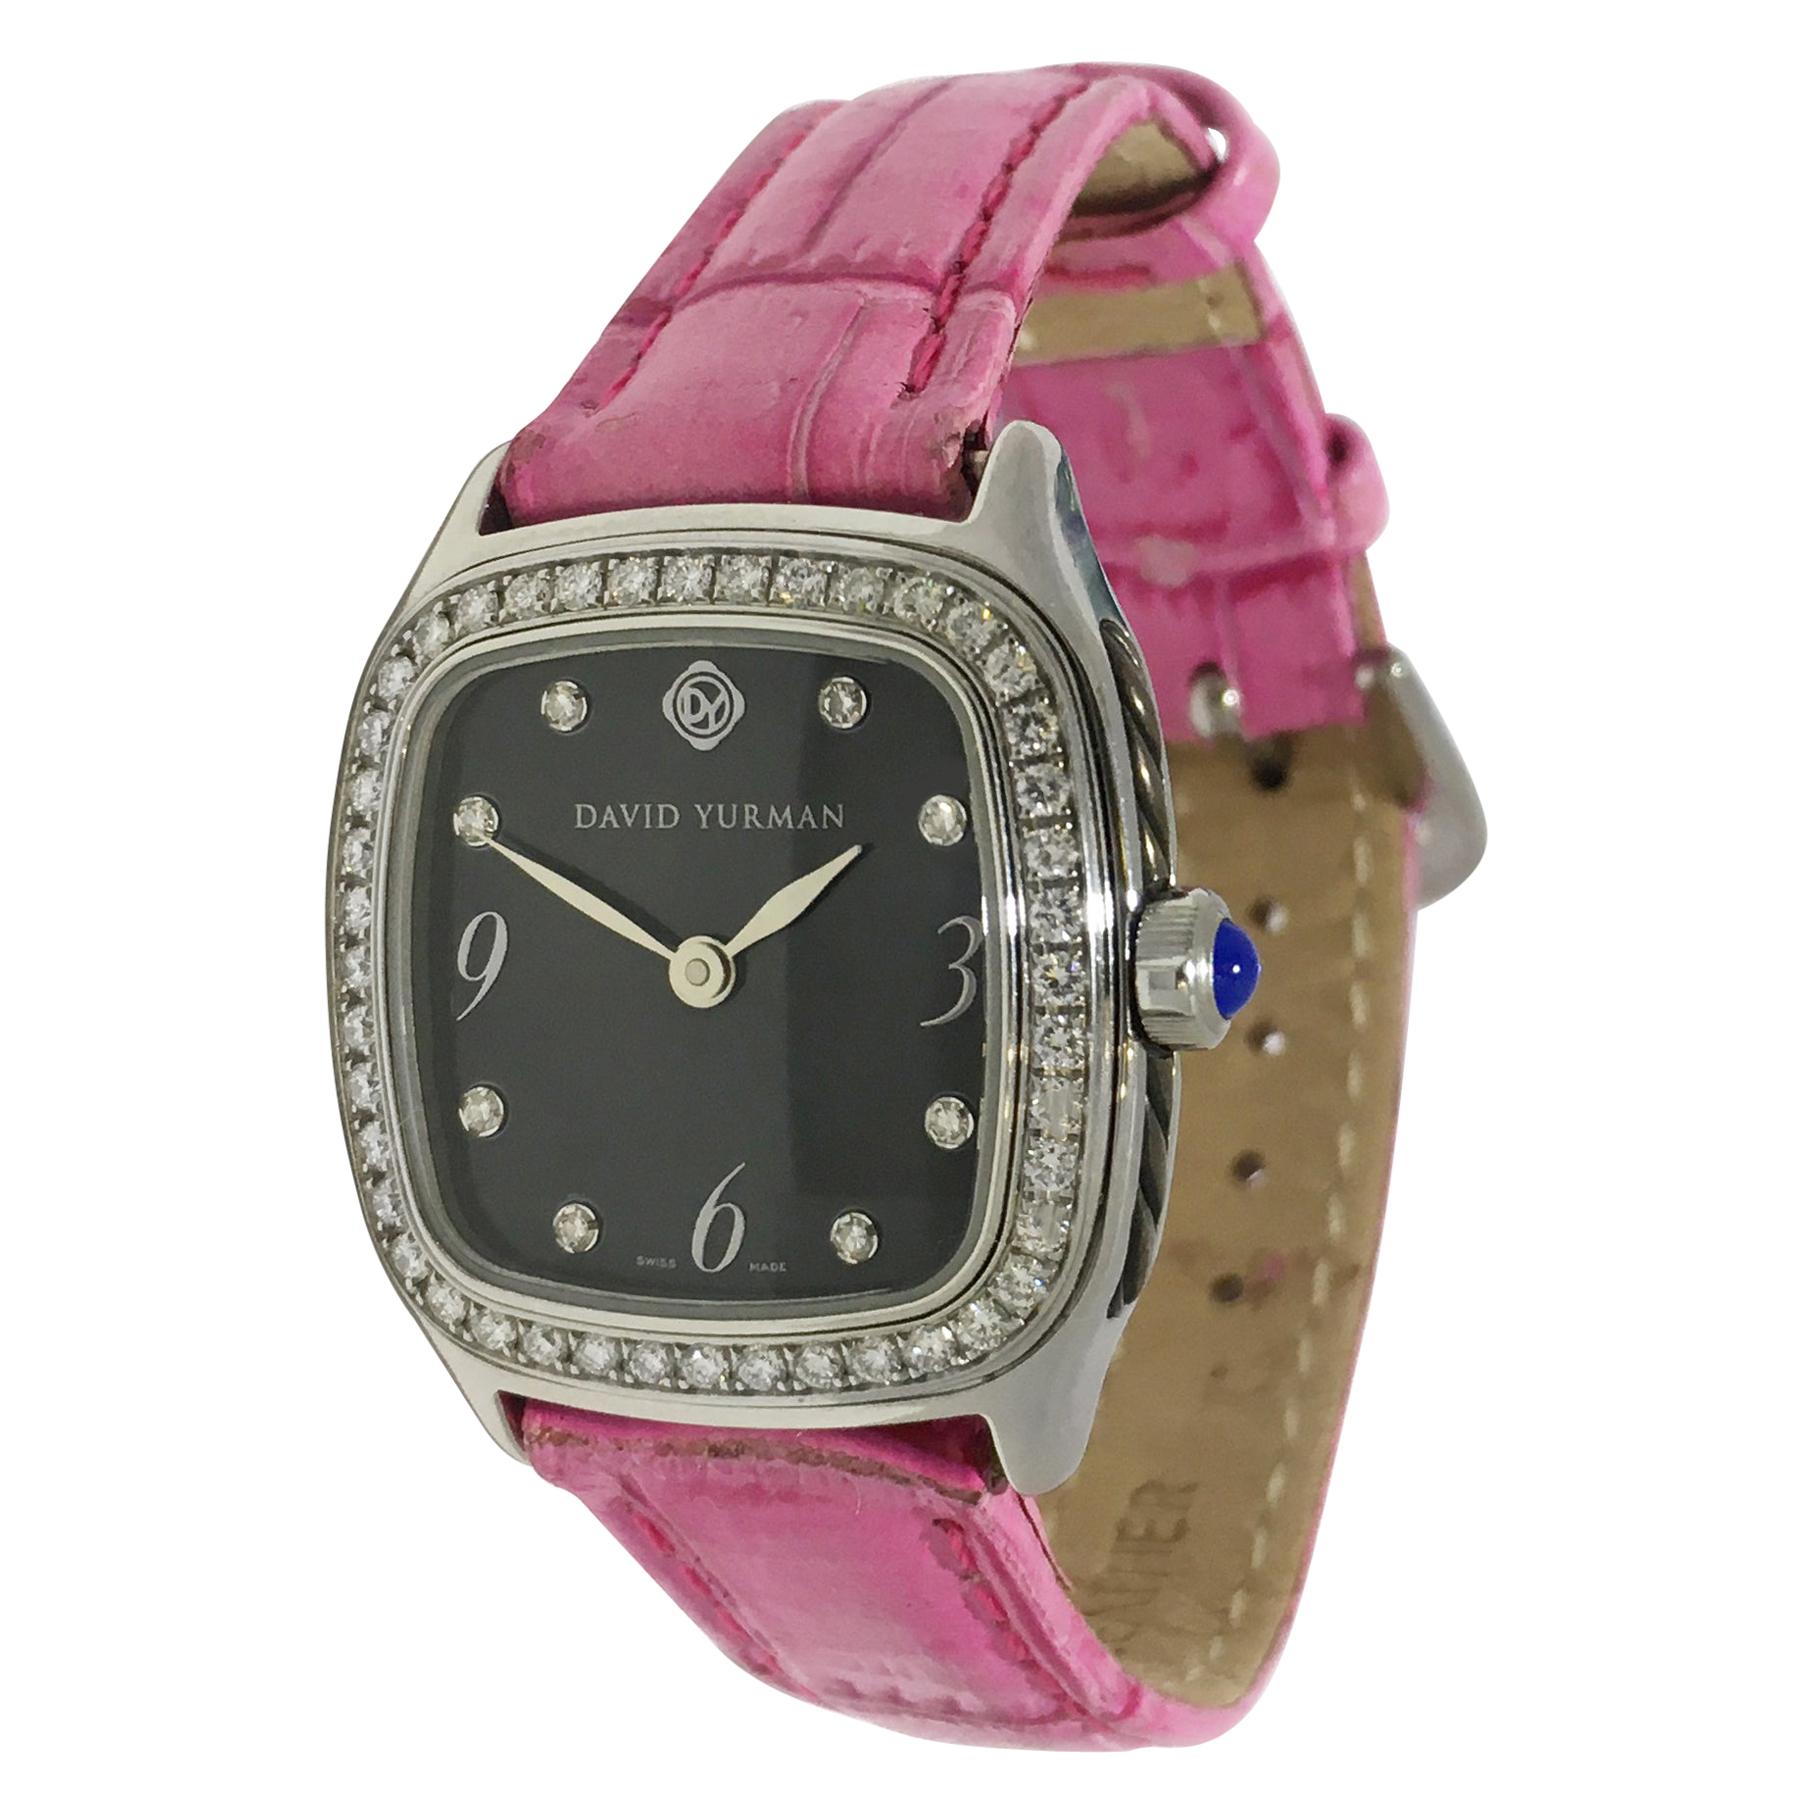 David Yurman Thoroughbred Women's Diamond Watch T304-XSST For Sale